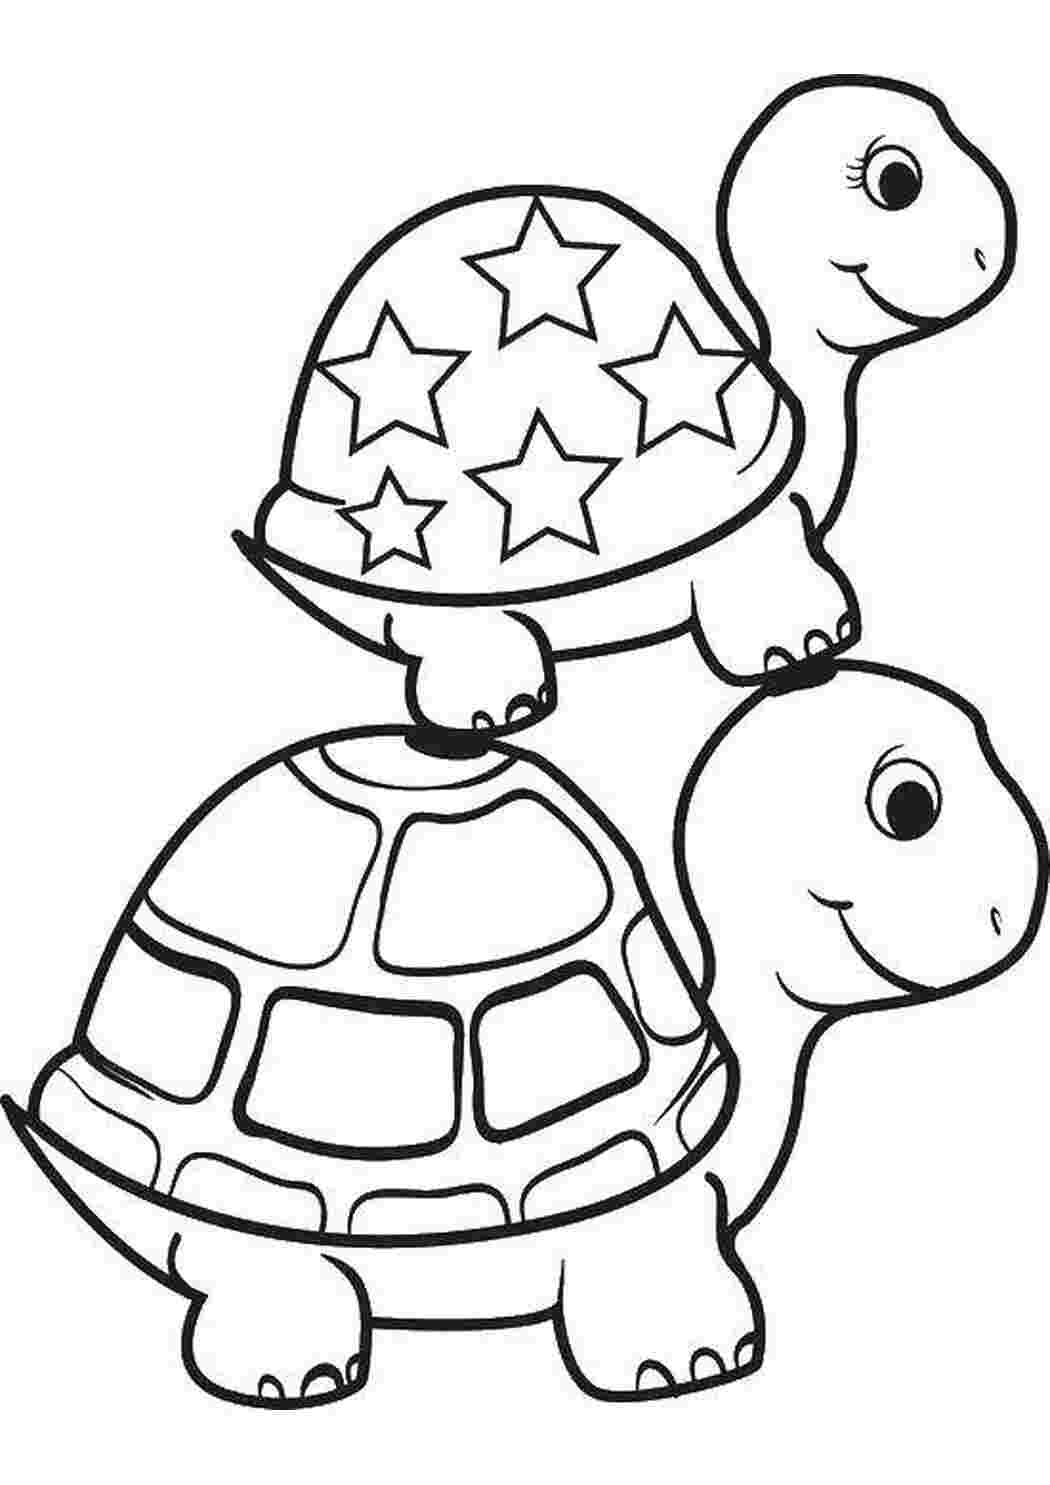 Раскраски Черепашка стоит на другой Морская черепаха Рептилия, черепаха